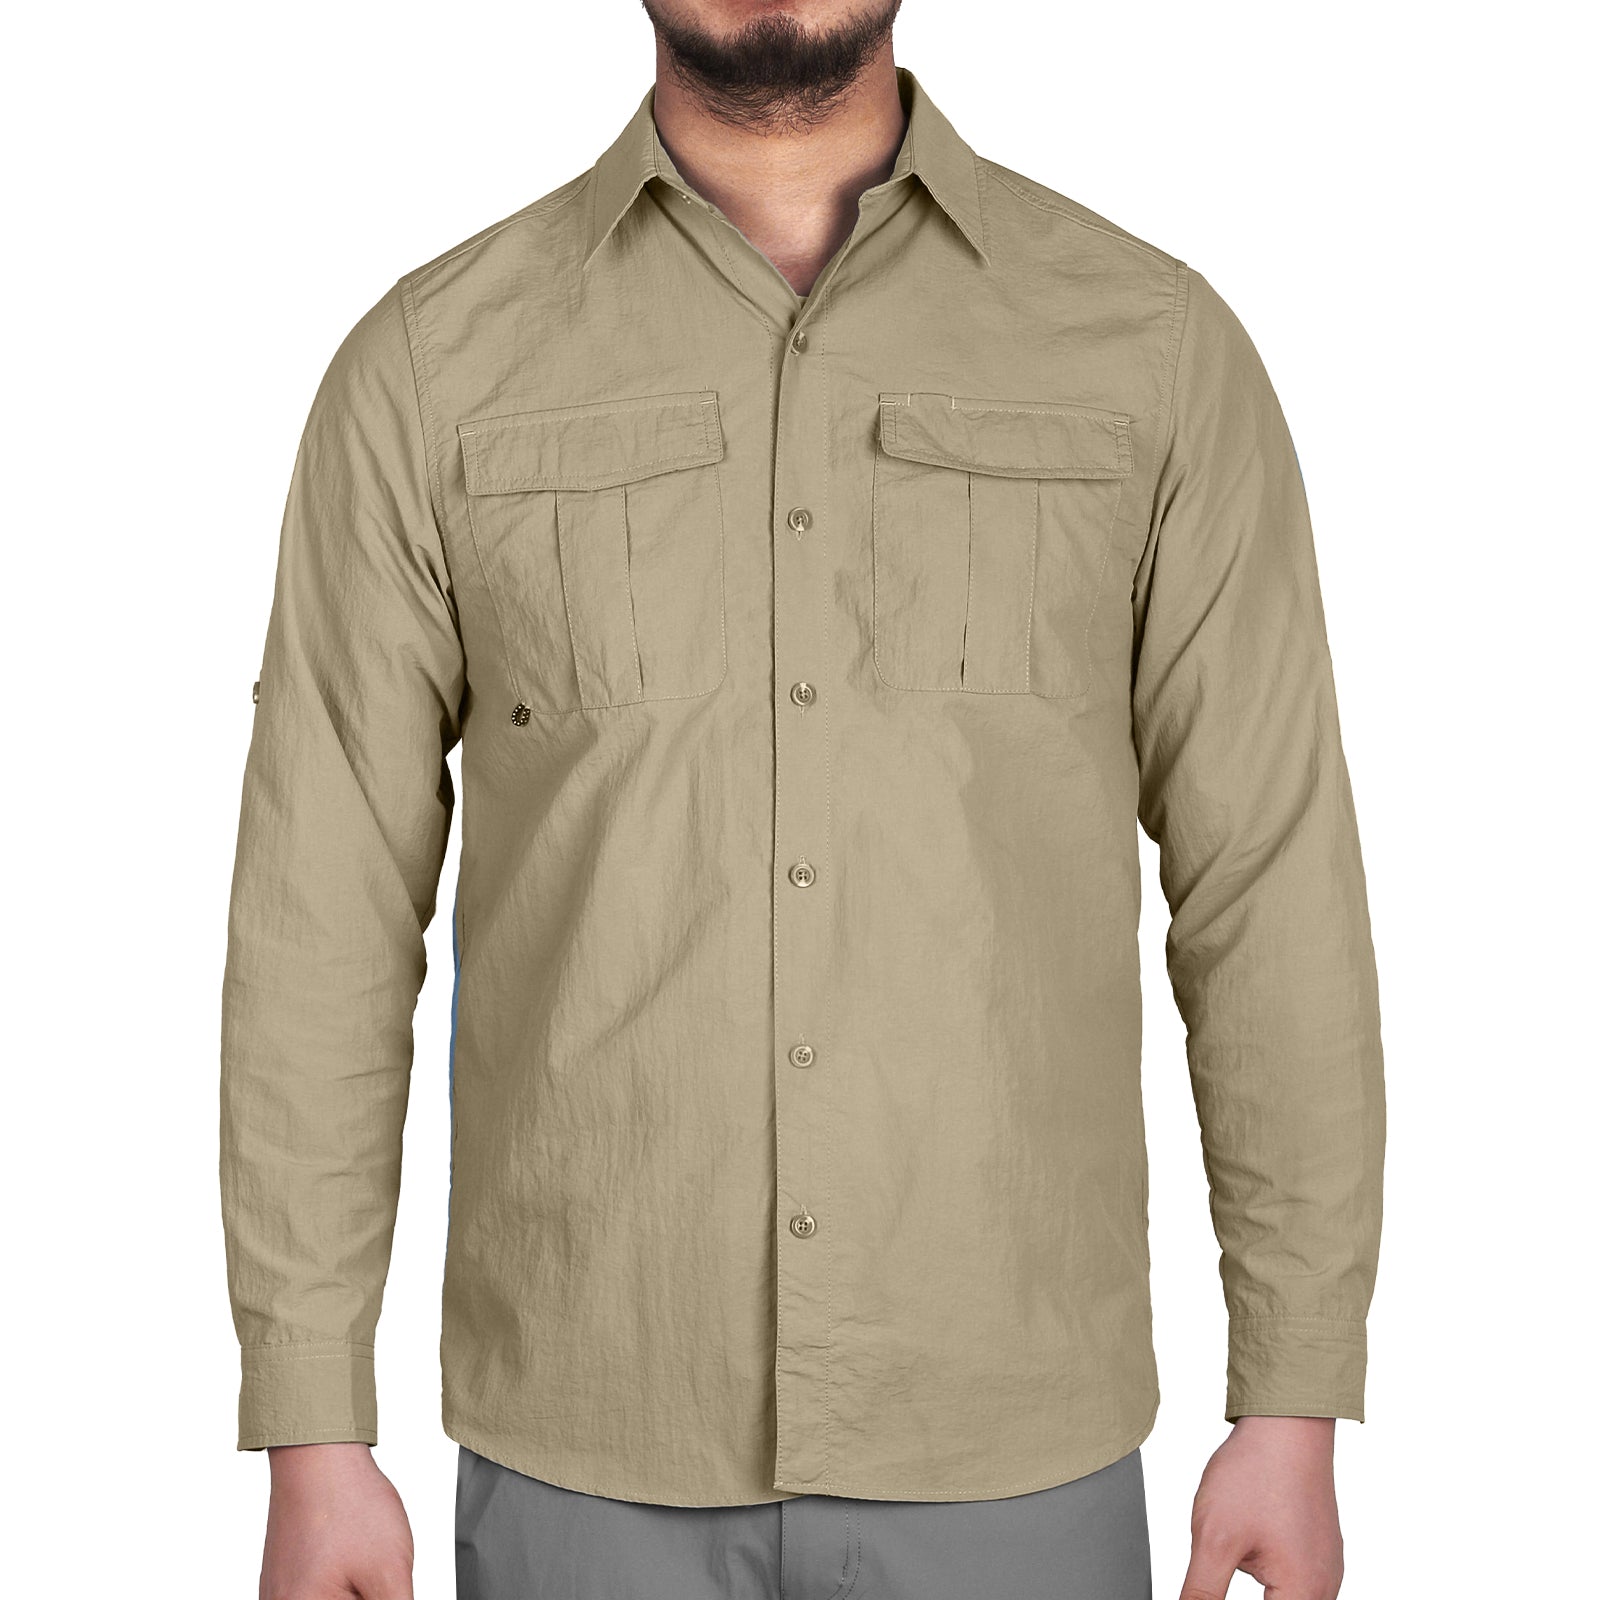 Men's Upf 50+ Quick Dry Long Sleeve Camouflage Camo Fishing Shirts - China  Camo Fishing Shirts and Hiking T-Shirts UV Sun Protection price